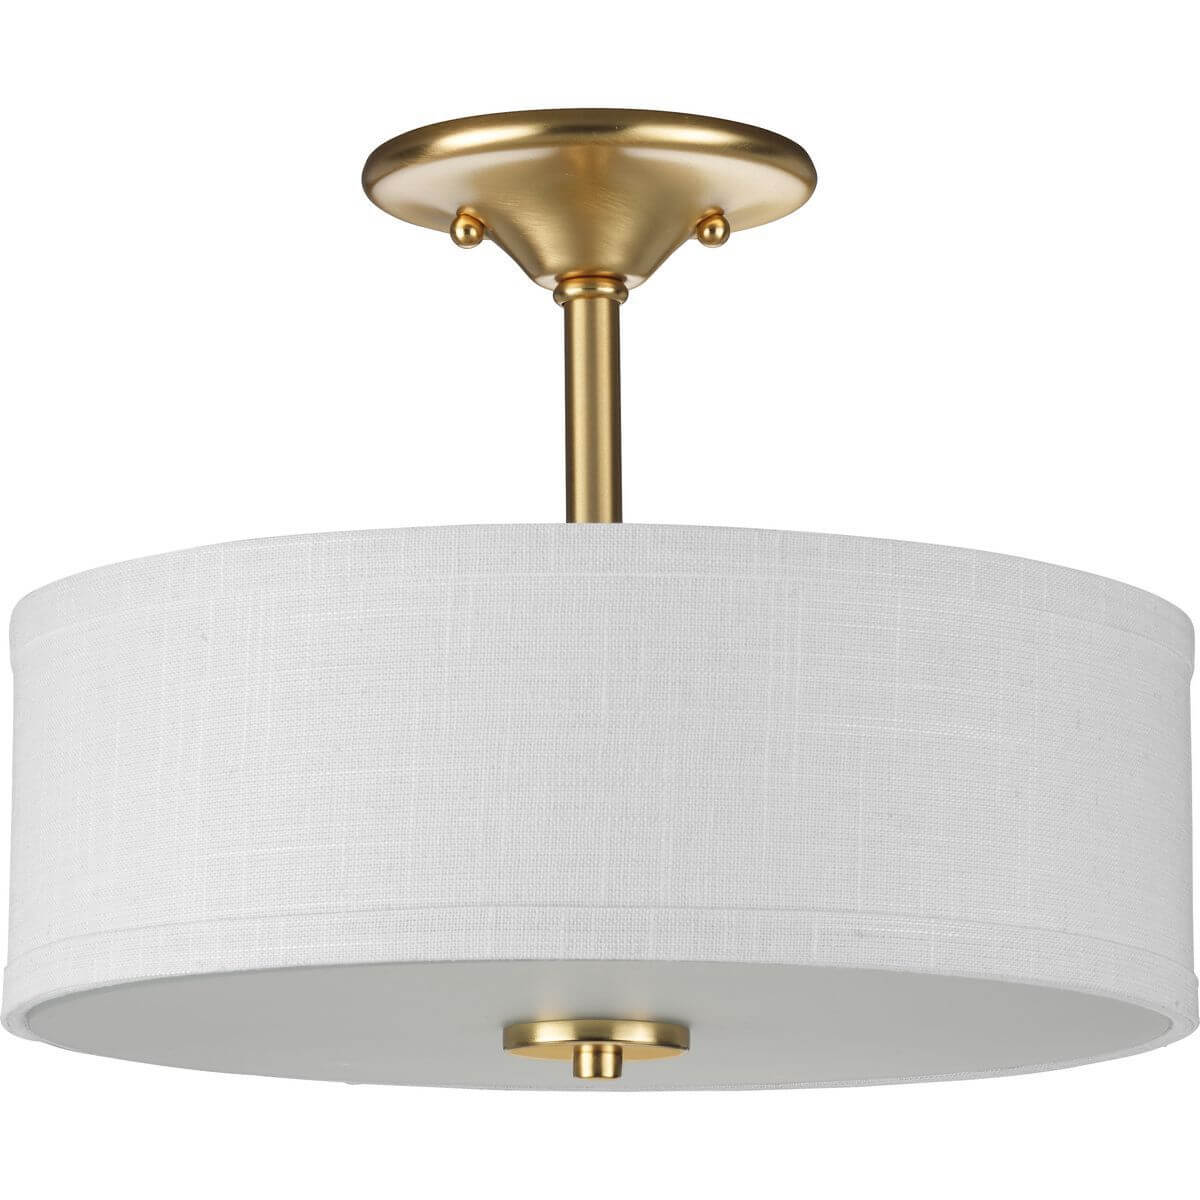 Progress Lighting Inspire 2 Light 13 inch Semi-Flush Mount in Satin Brass with Summer Linen Fabric Shade P350129-012